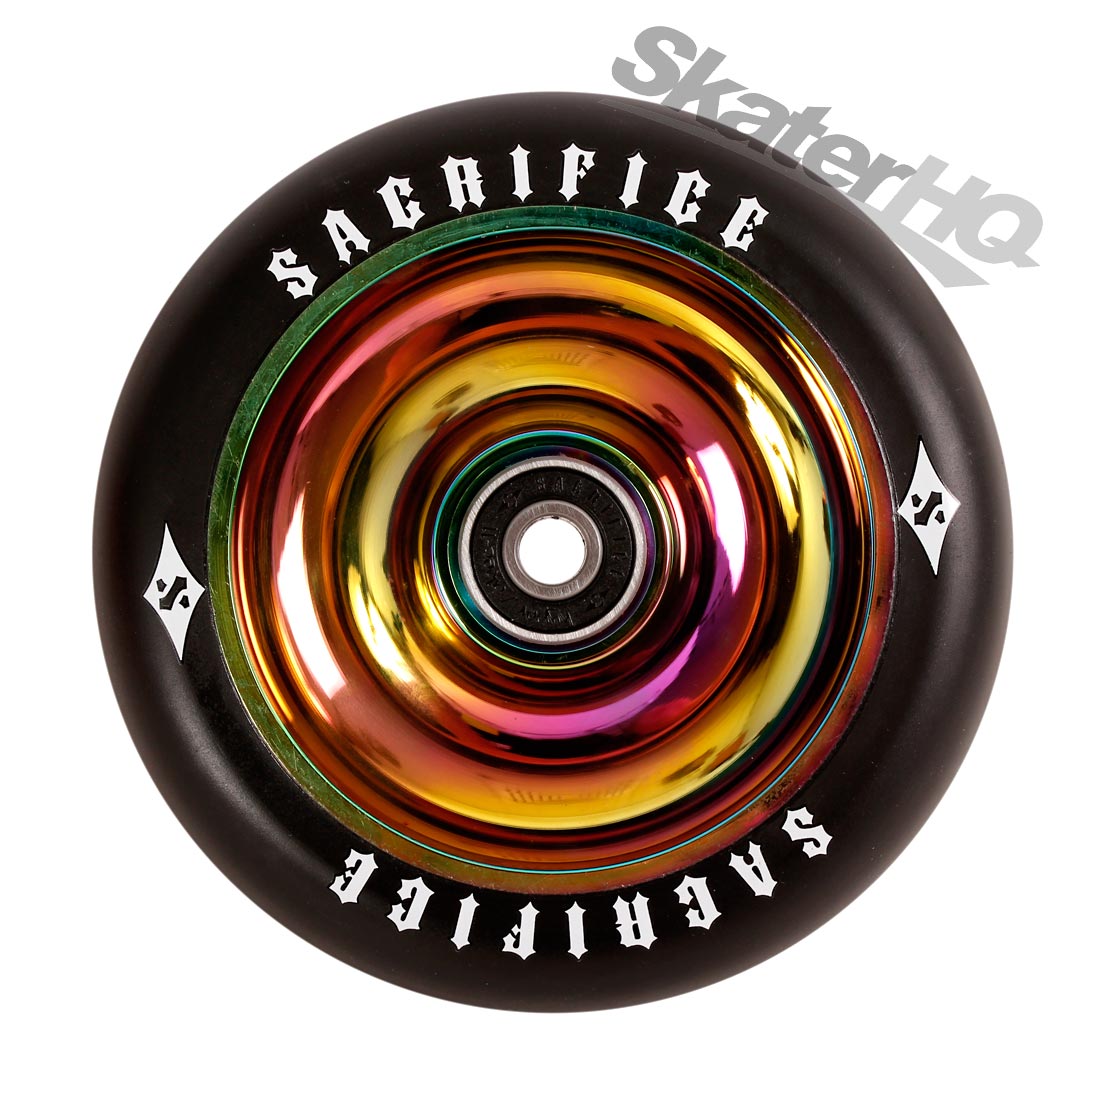 Sacrifice Oil Slick 110mm Wheel - Neochrome Scooter Wheels